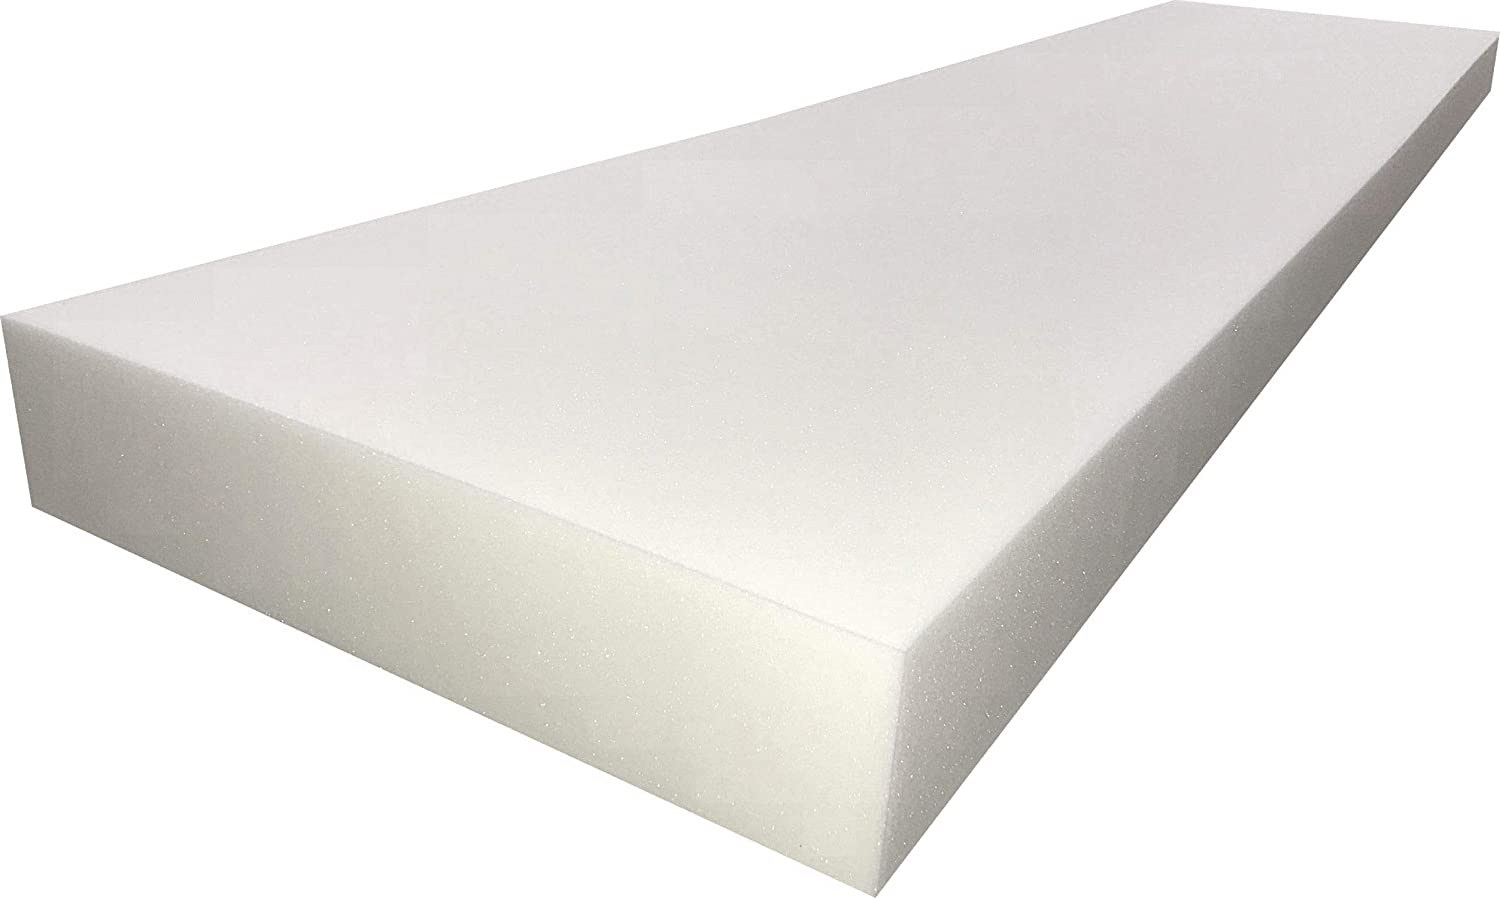 FoamTouch Upholstery Foam High Density Cushion